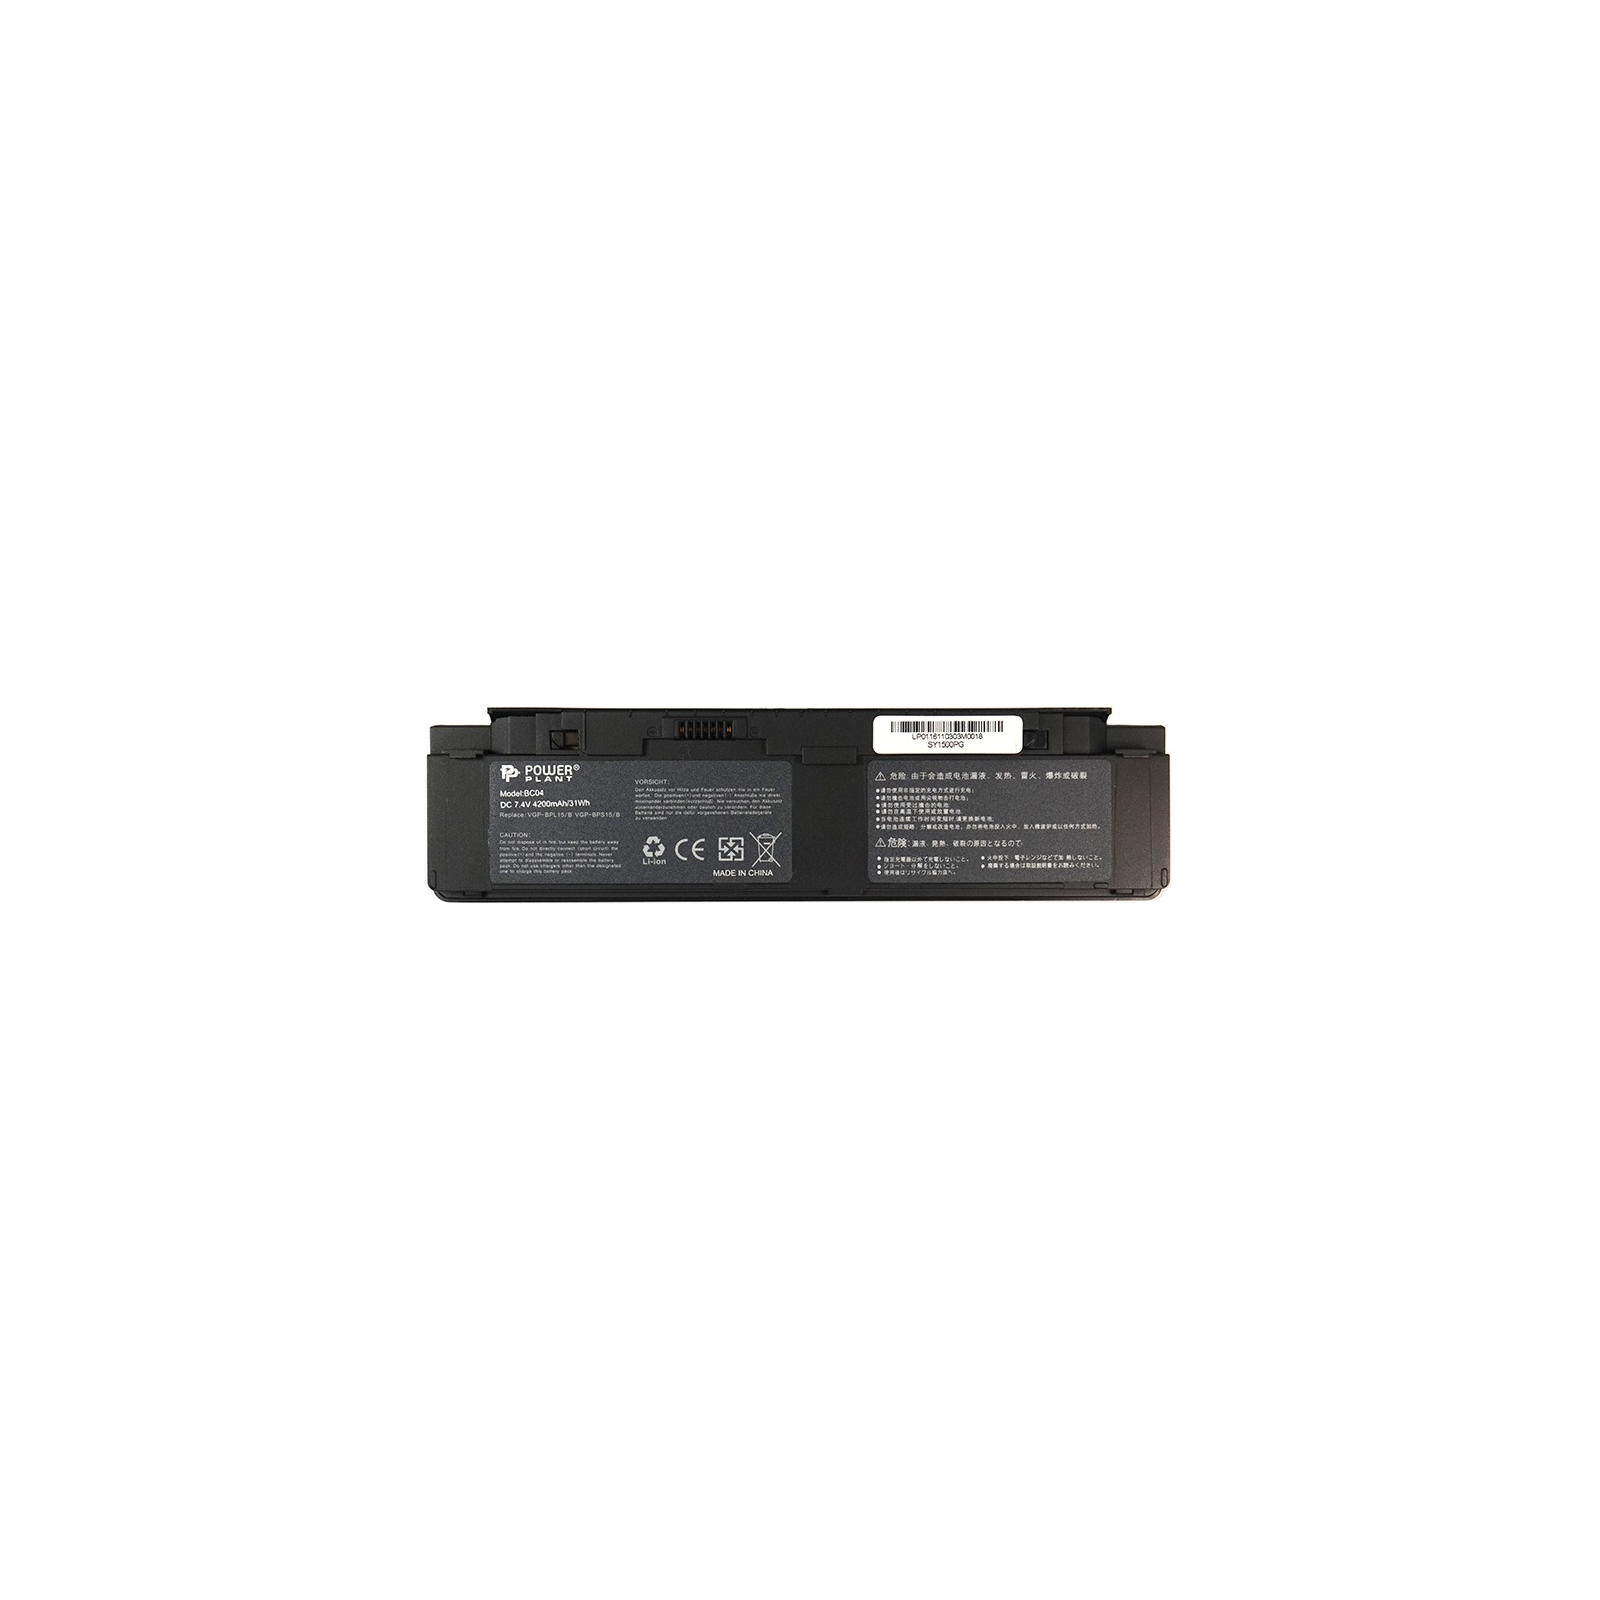 Акумулятор до ноутбука SONY VAIO VGP-BPL15/B (VGN-P31ZK/R) 7.4V 4200mAh PowerPlant (NB520053)